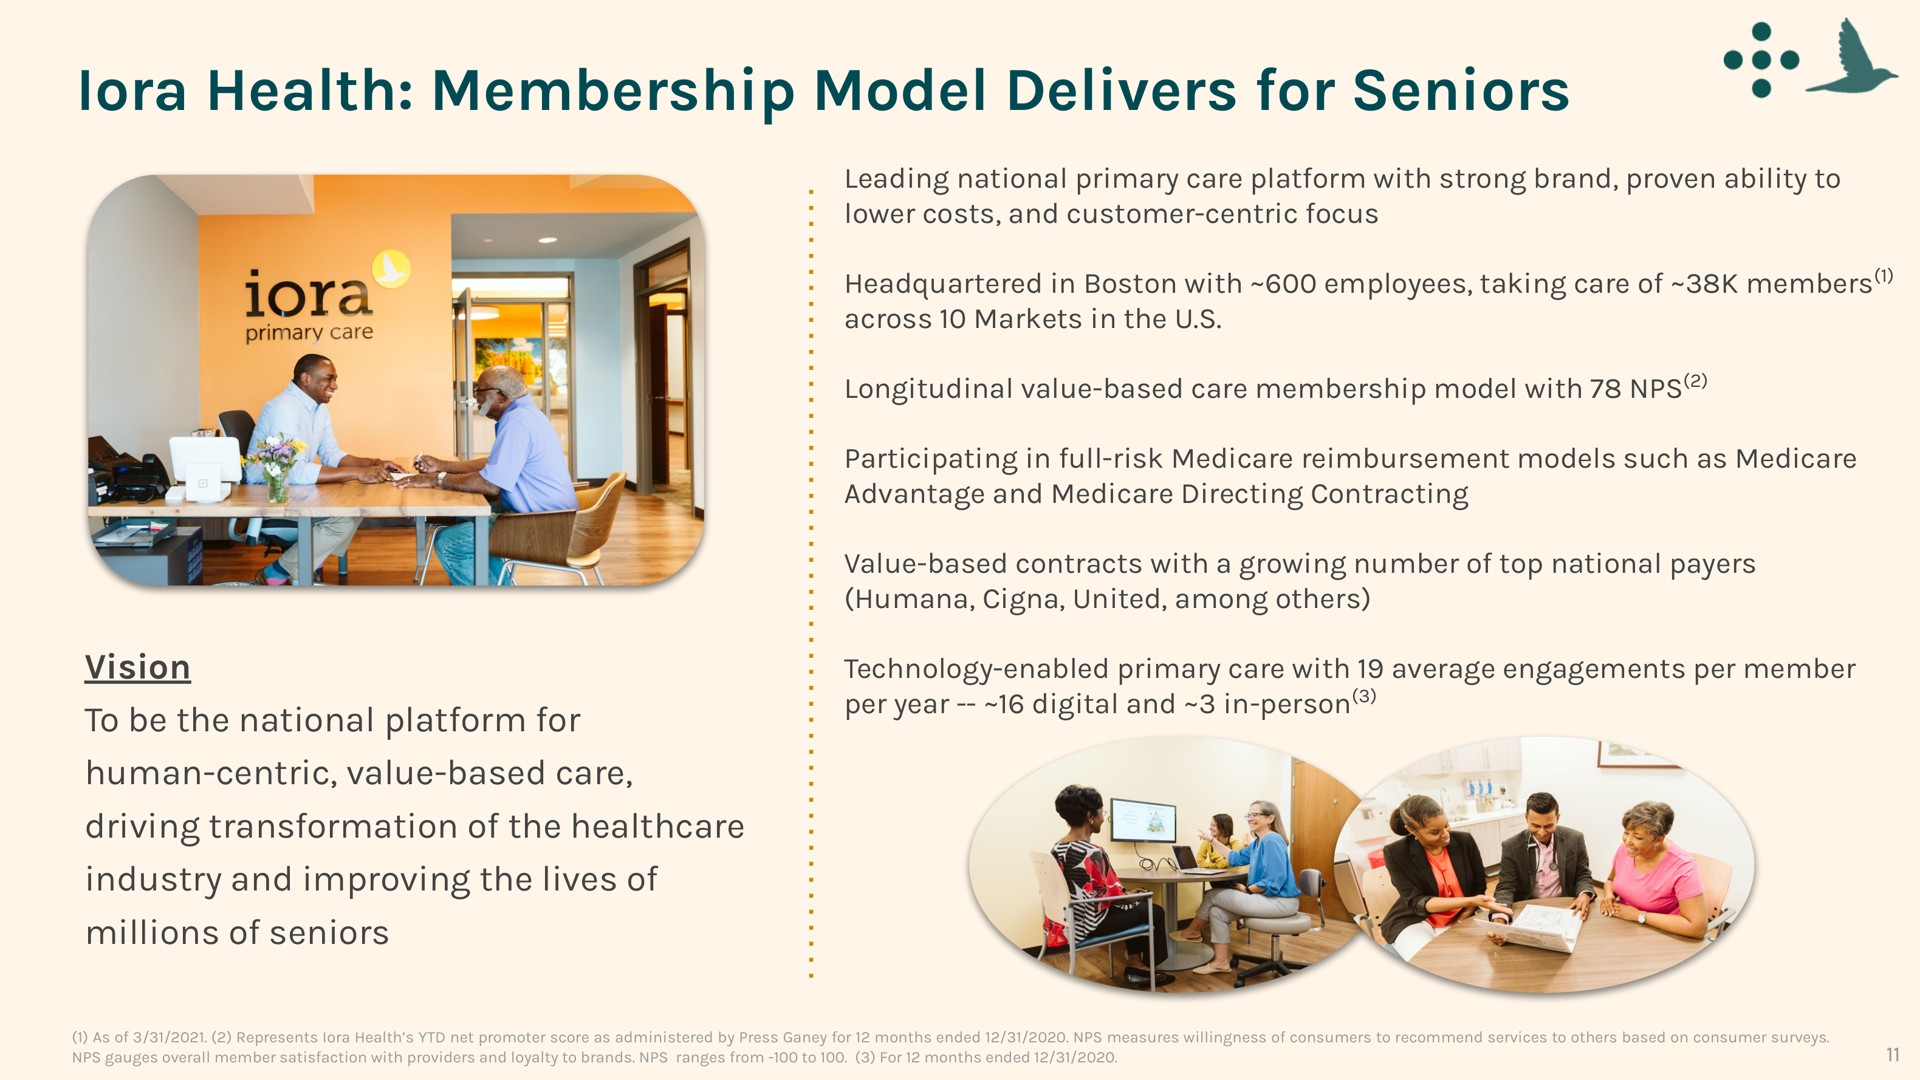 health membership model delivers for seniors lora | One Medical